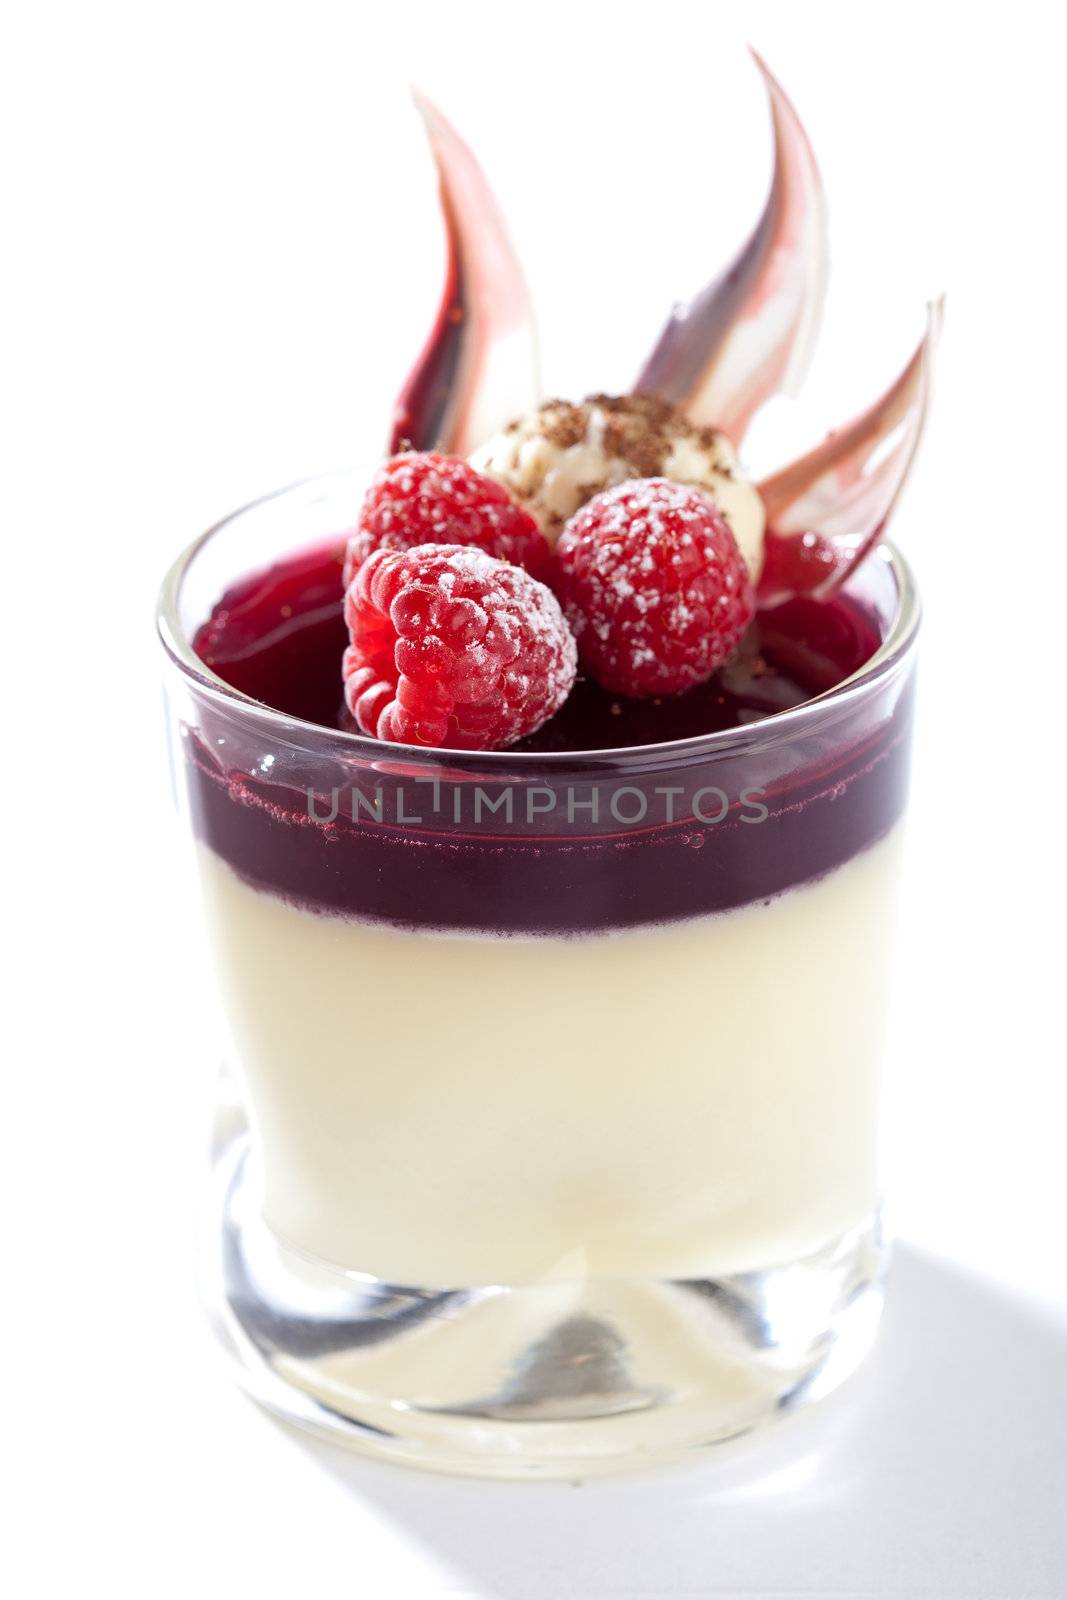 Elegant and fresh dessert; pannacotta with raspberries